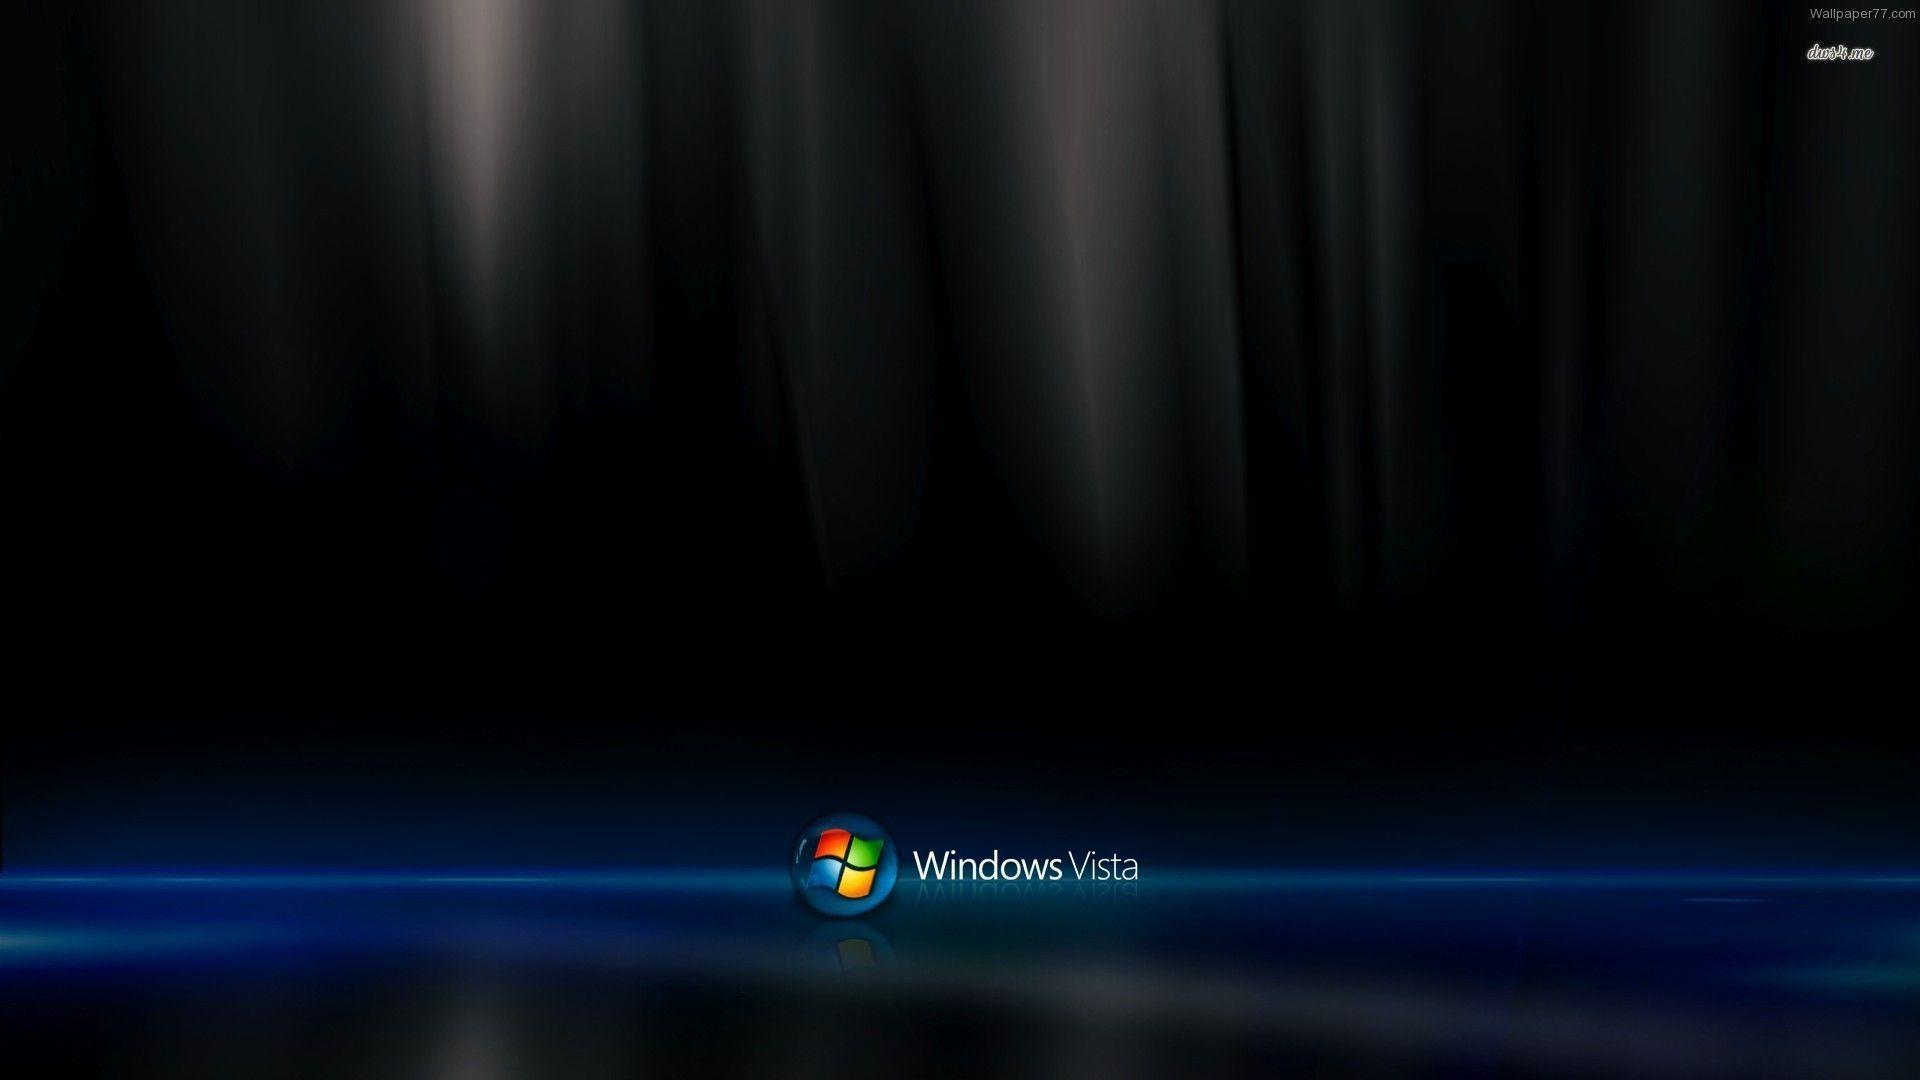 Windows Vista wallpaper wallpaper - #